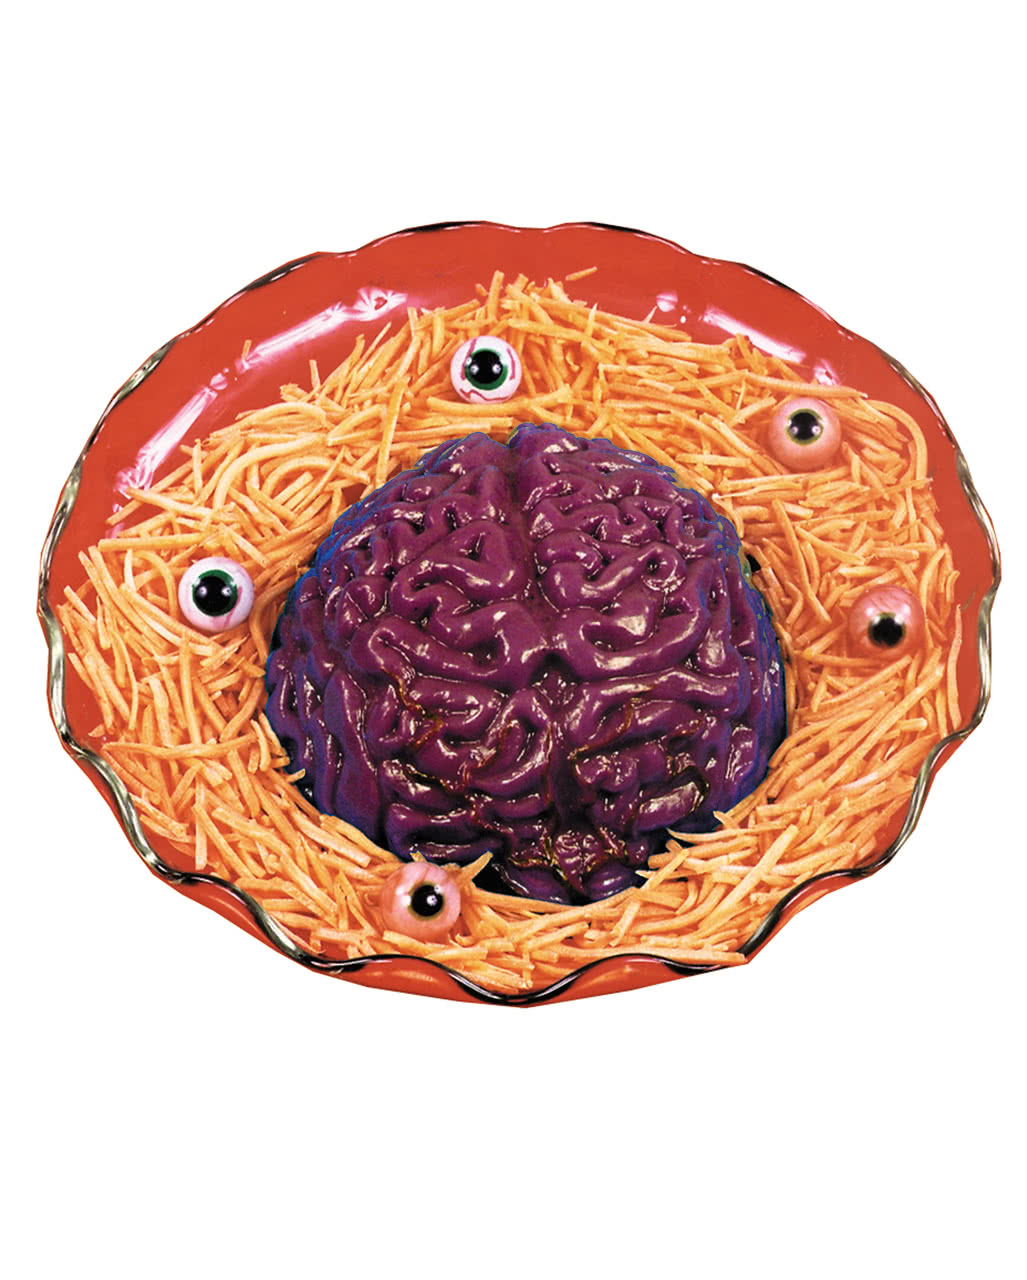 Puddingform Gehirn für Halloween | Horror-Shop.com